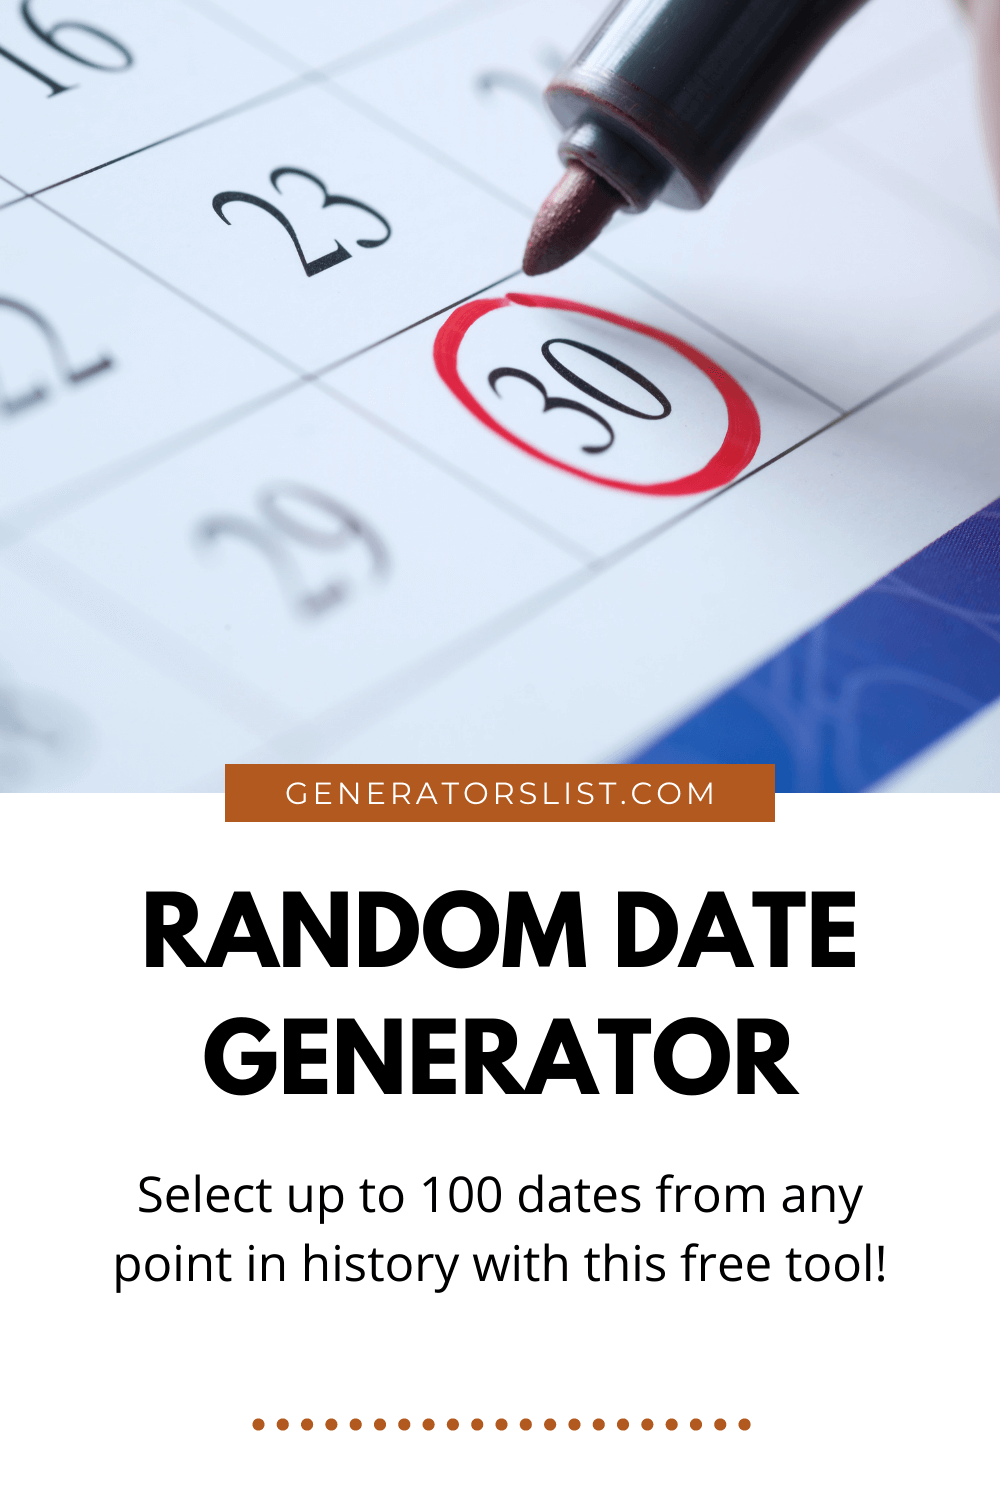 Random Date Generator Generators List